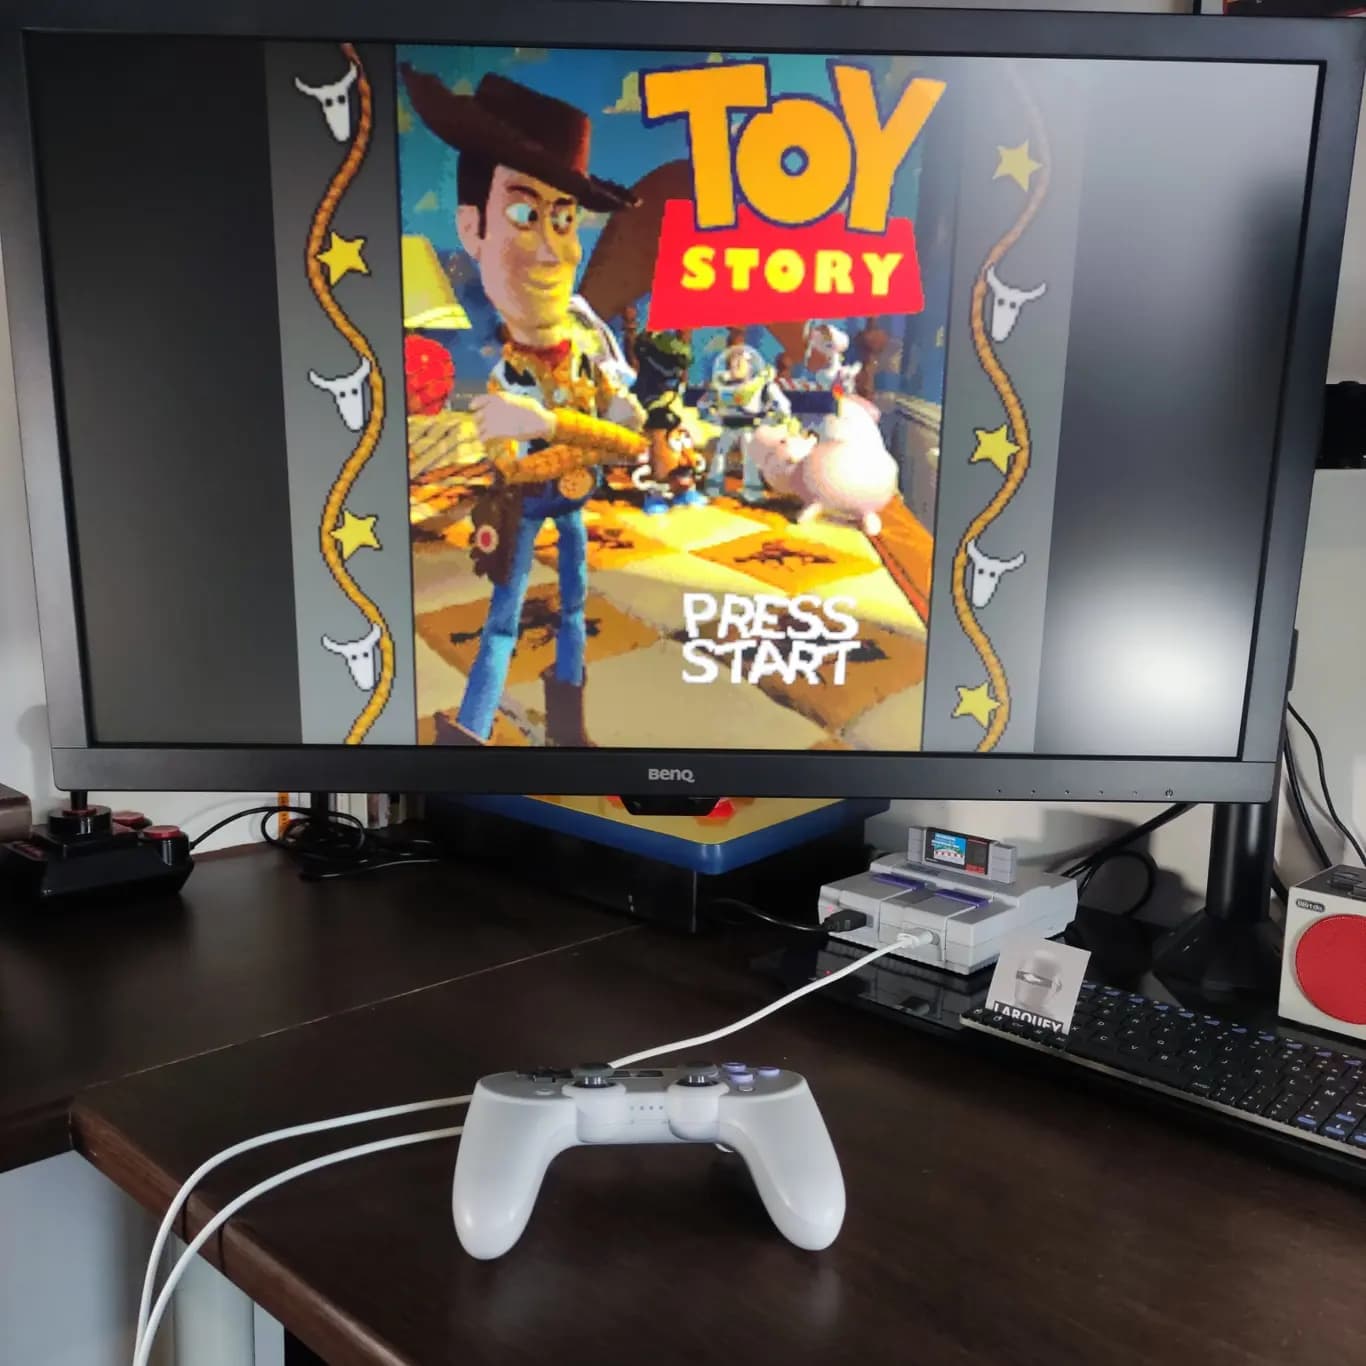 Larquey: Toy Story [Total Stars/Cowboy] (Sega Genesis / MegaDrive Emulated) 62 points on 2022-09-15 06:51:04